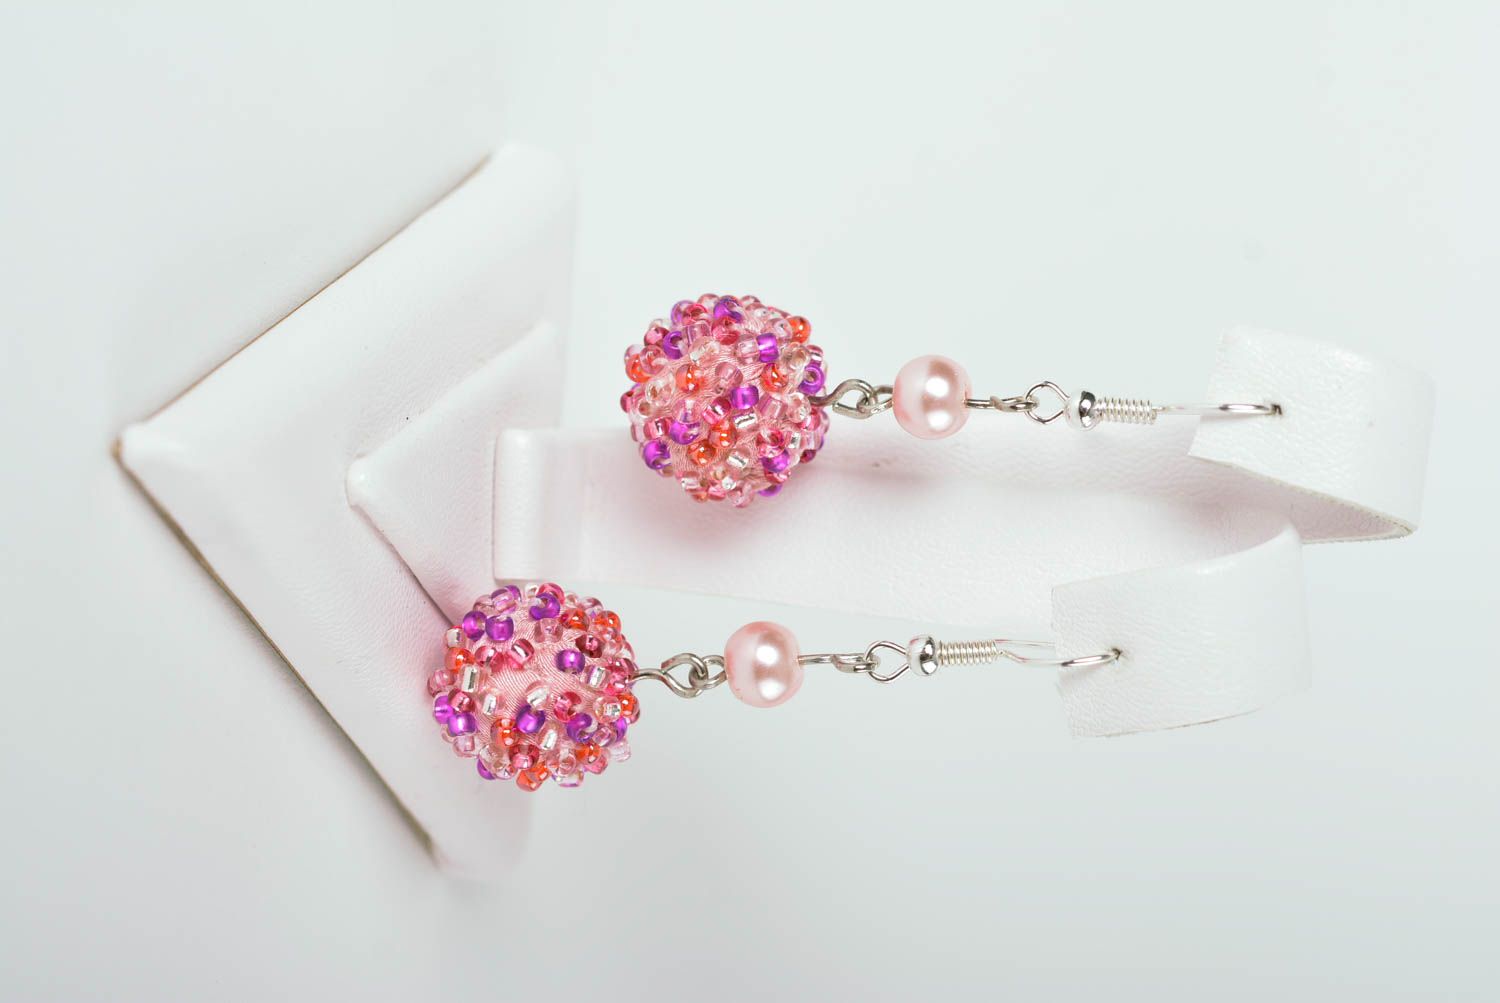 Handmade long beaded earrings stylish pink earrings cute designer jewelry photo 1